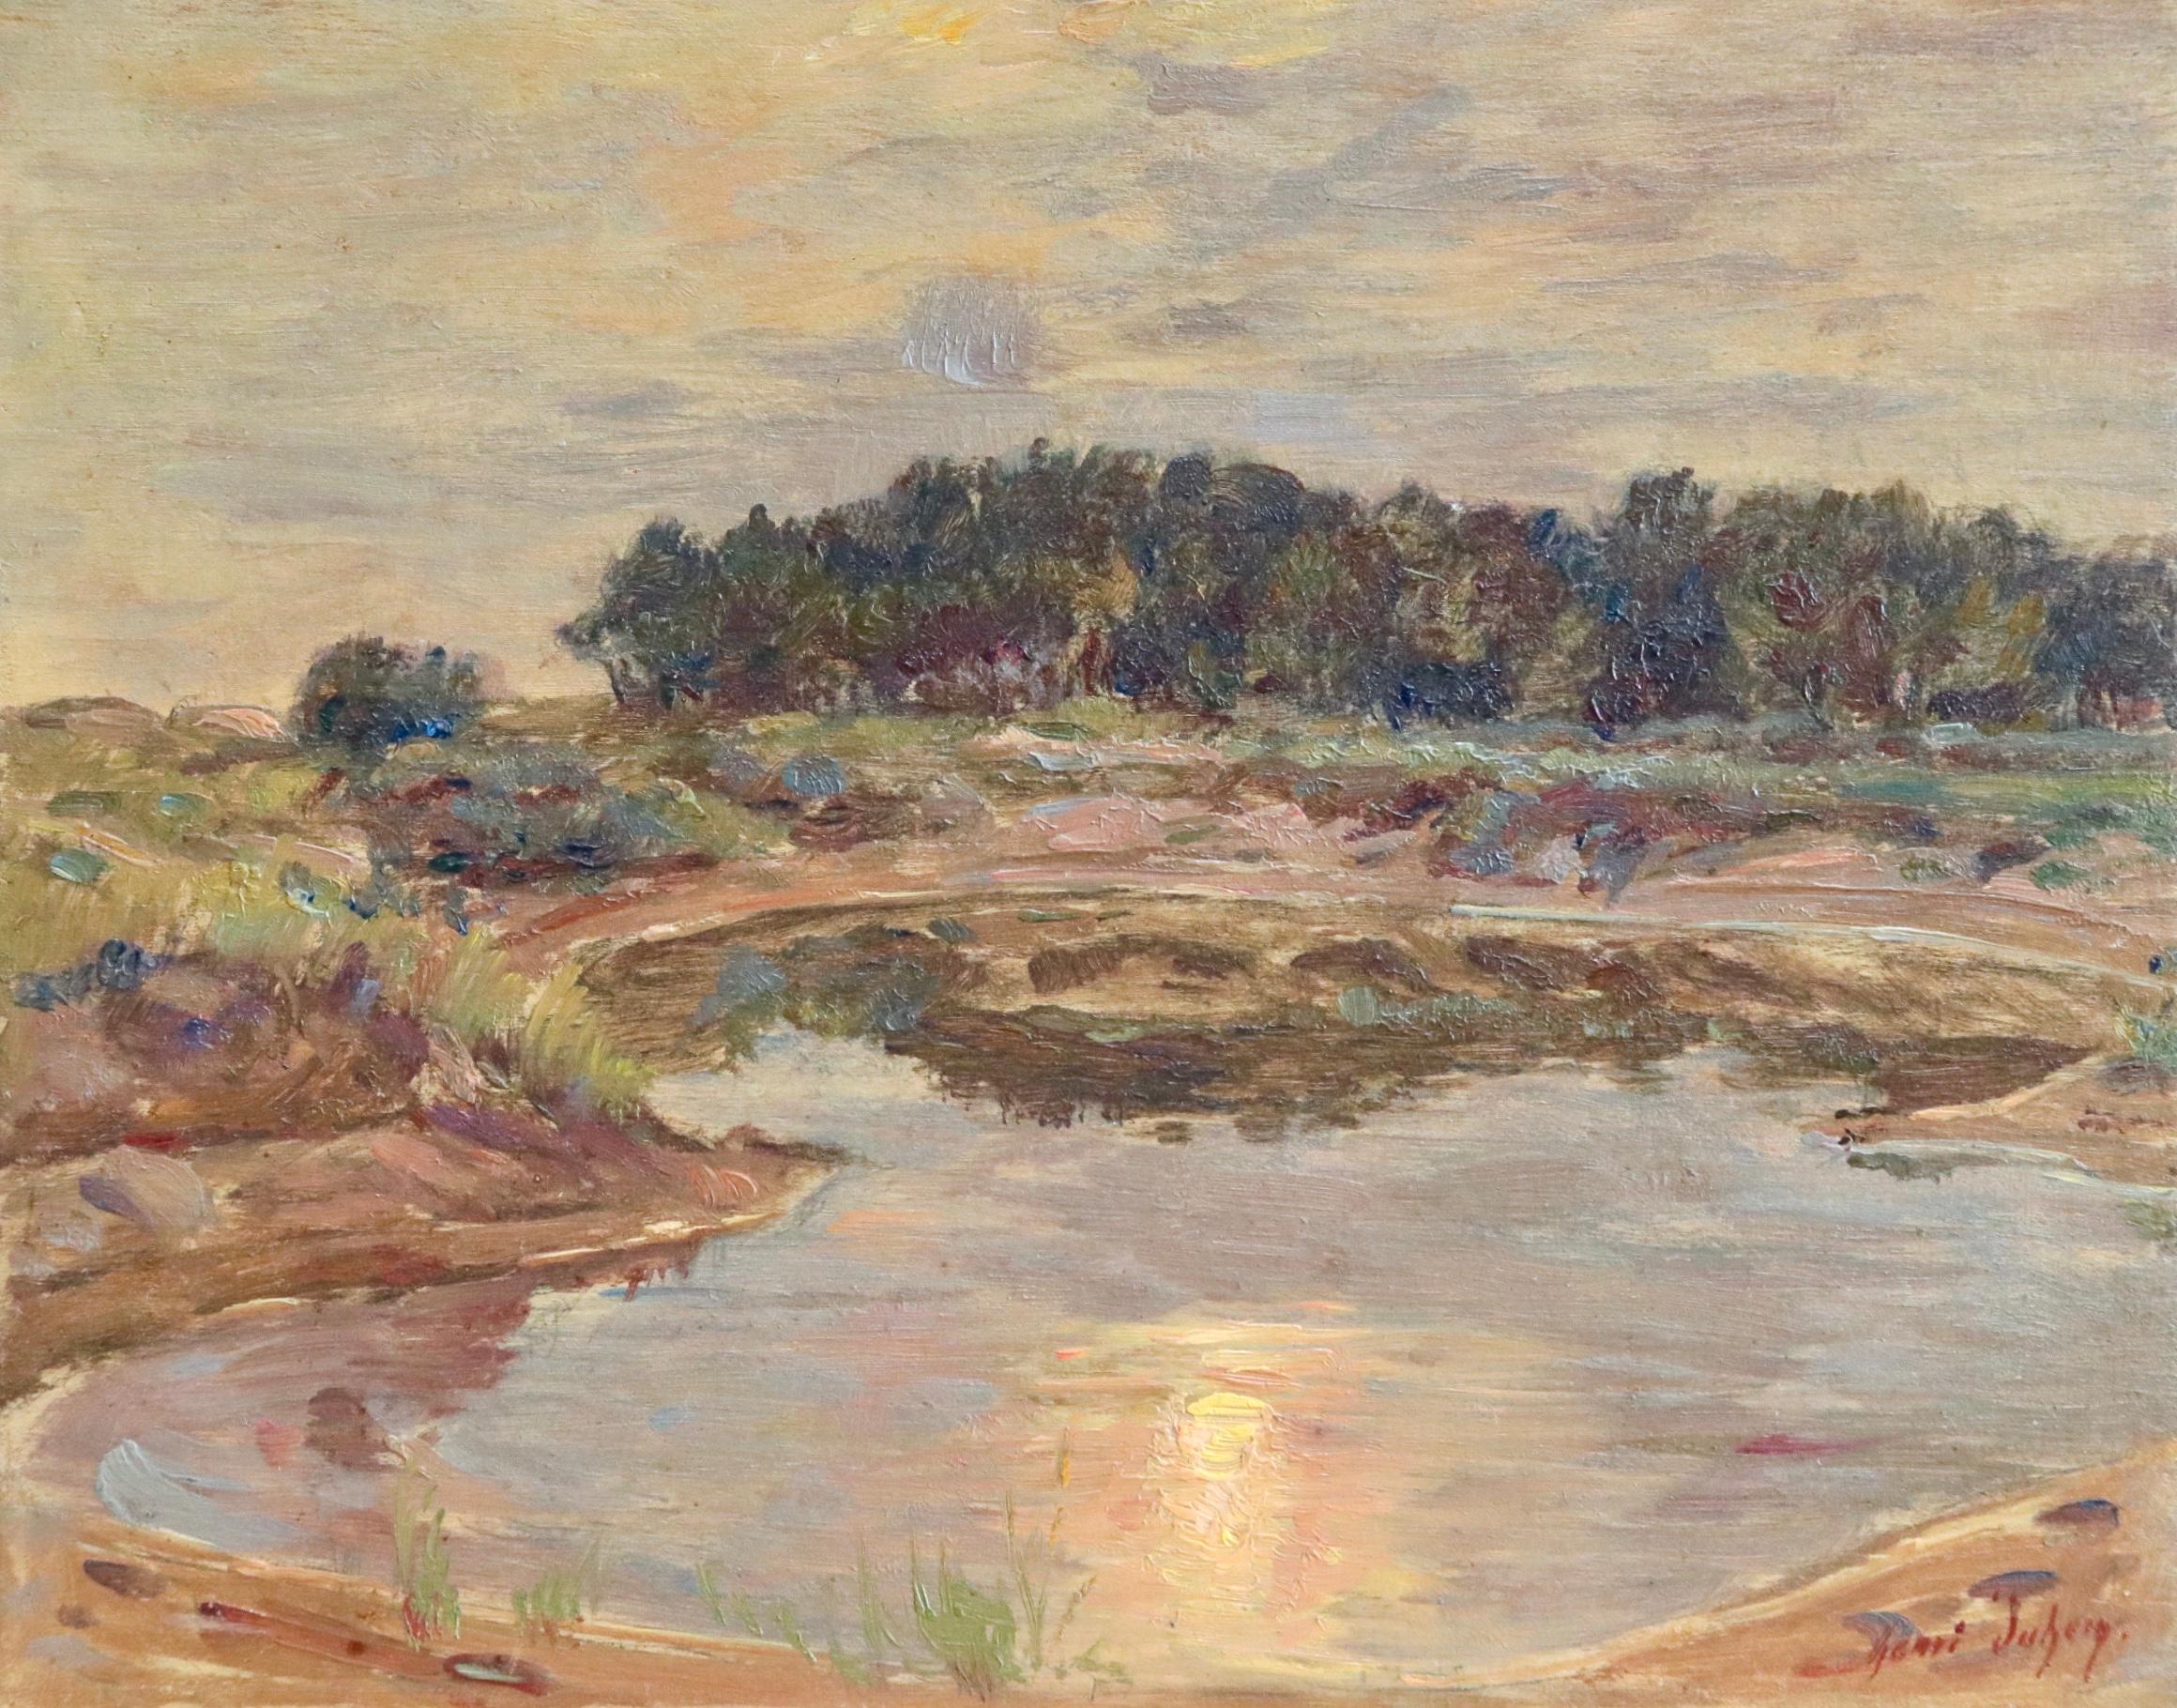 Reflection - Evening - 19th Century Oil, Landscape at Sunset by Henri Duhem